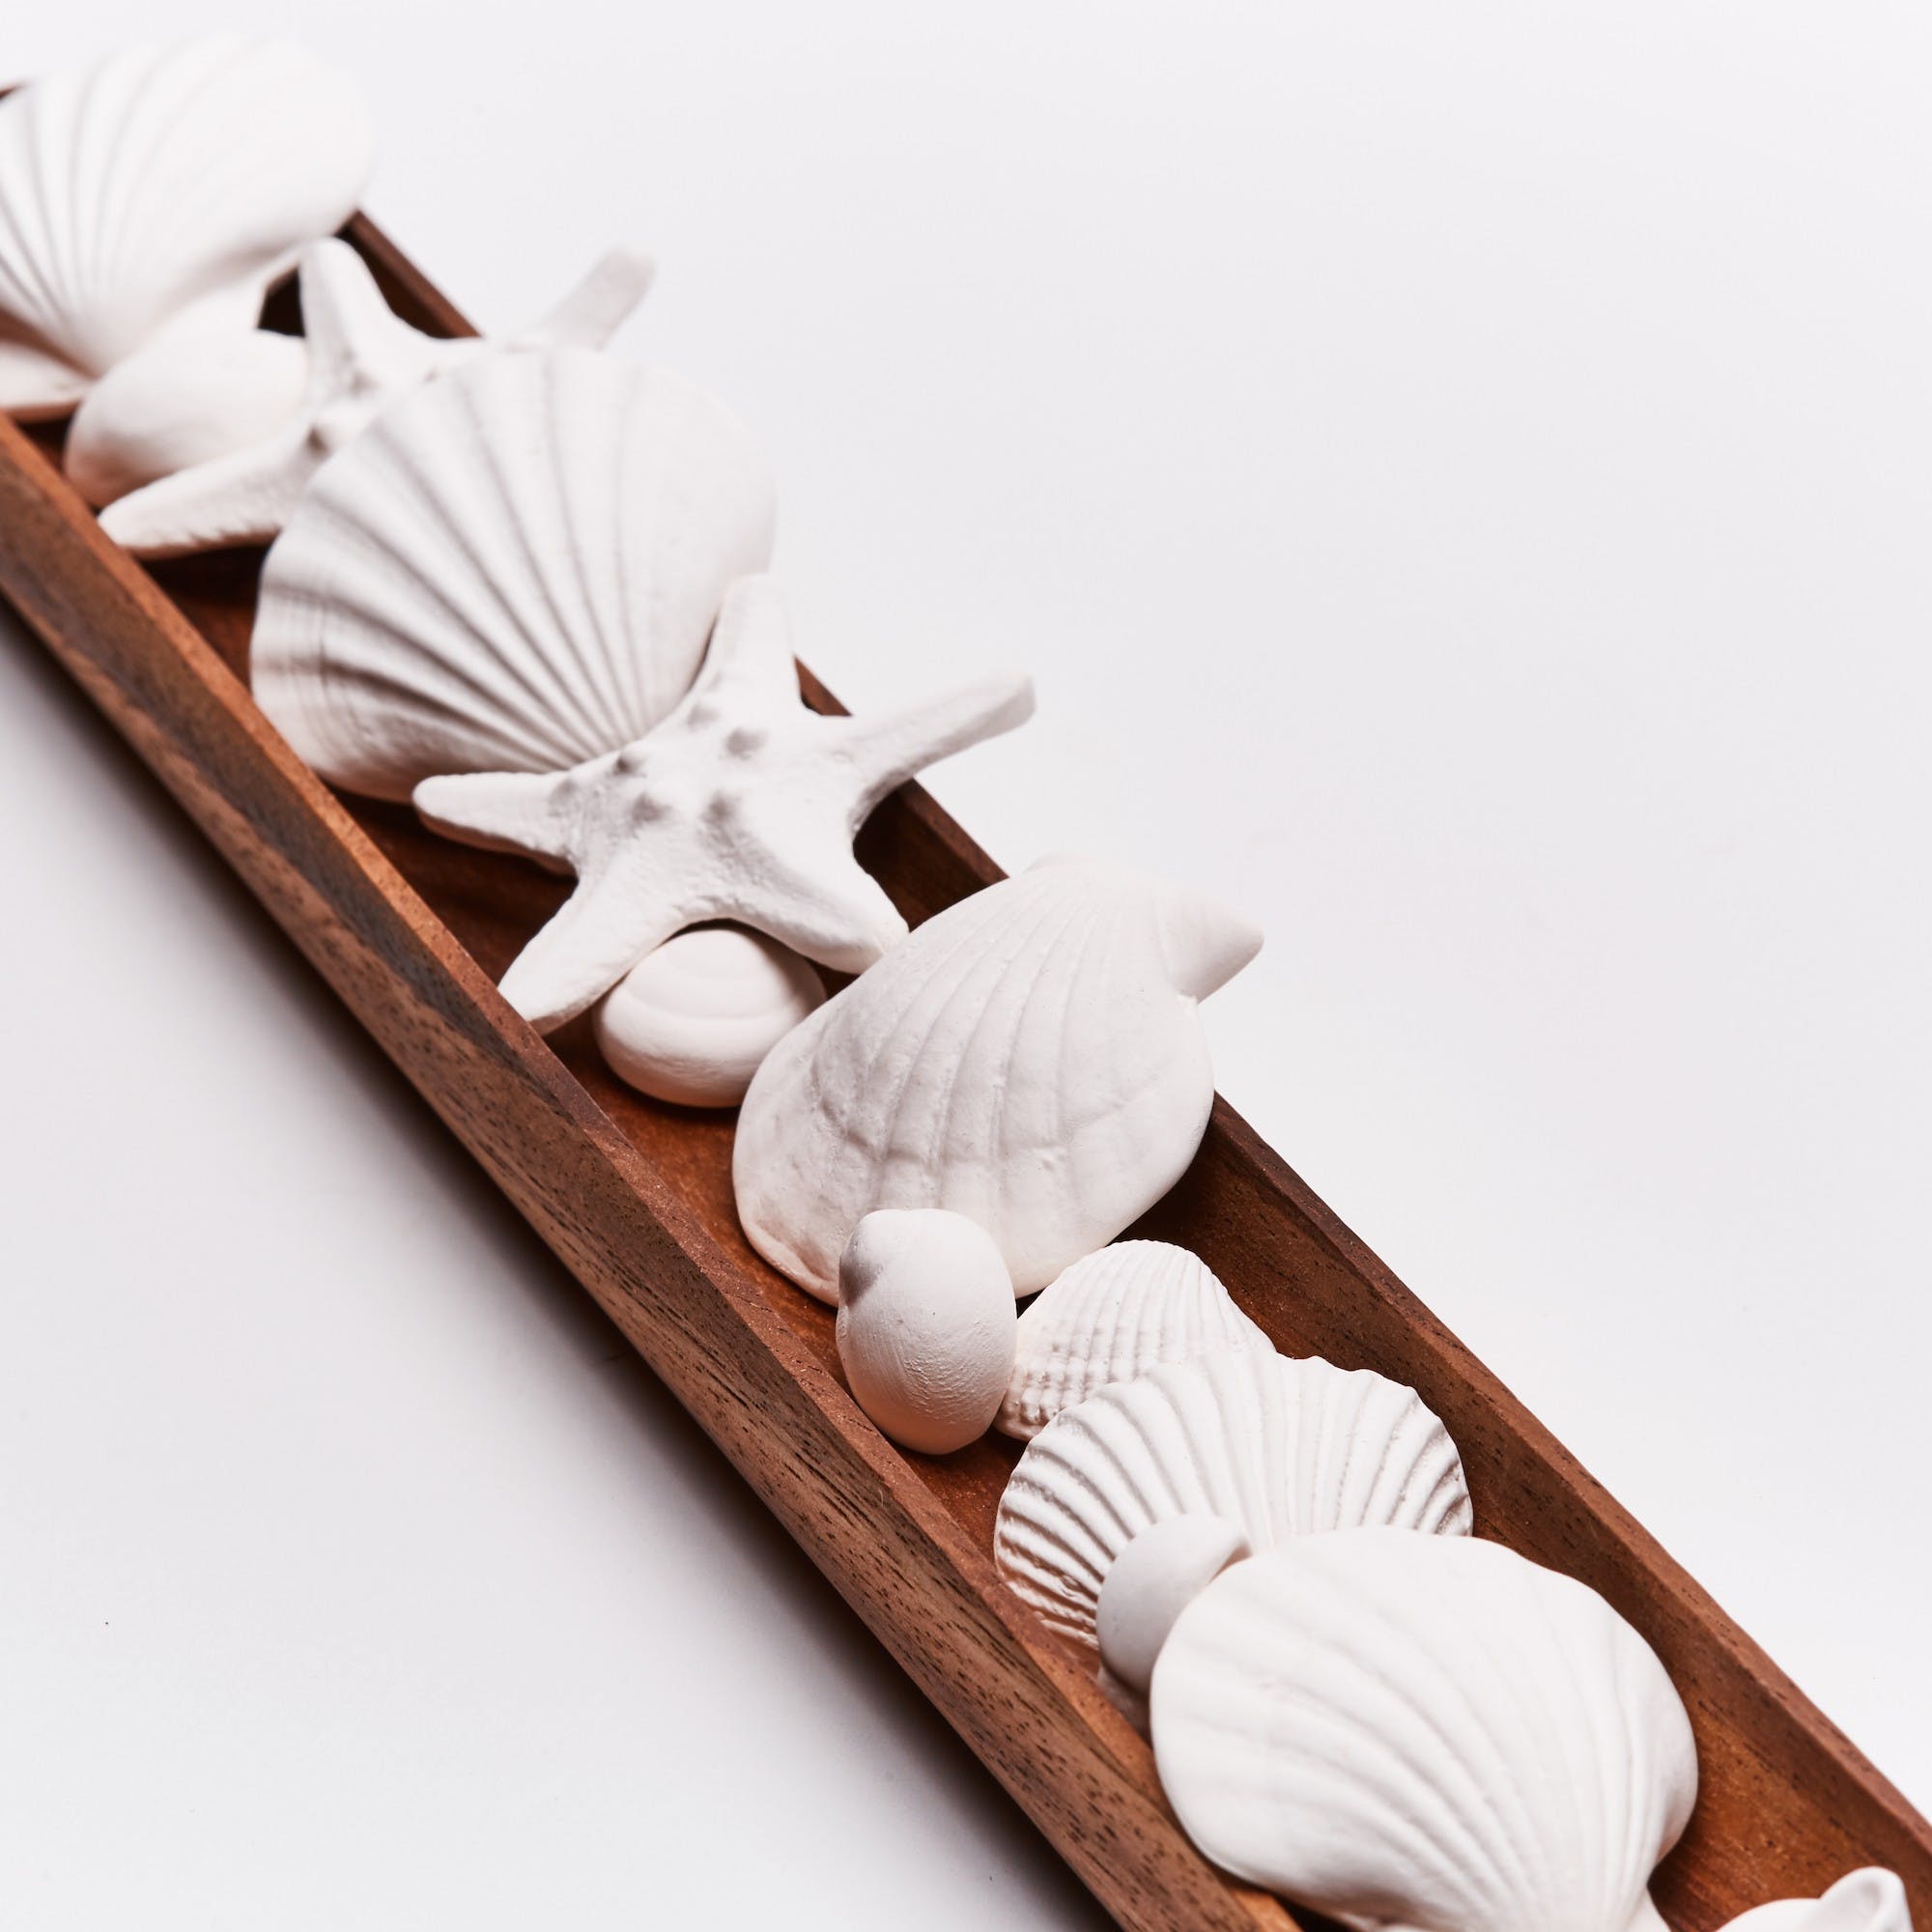 Perfume diffuser wood tray and Porcelain seashells - Natalia Willmott